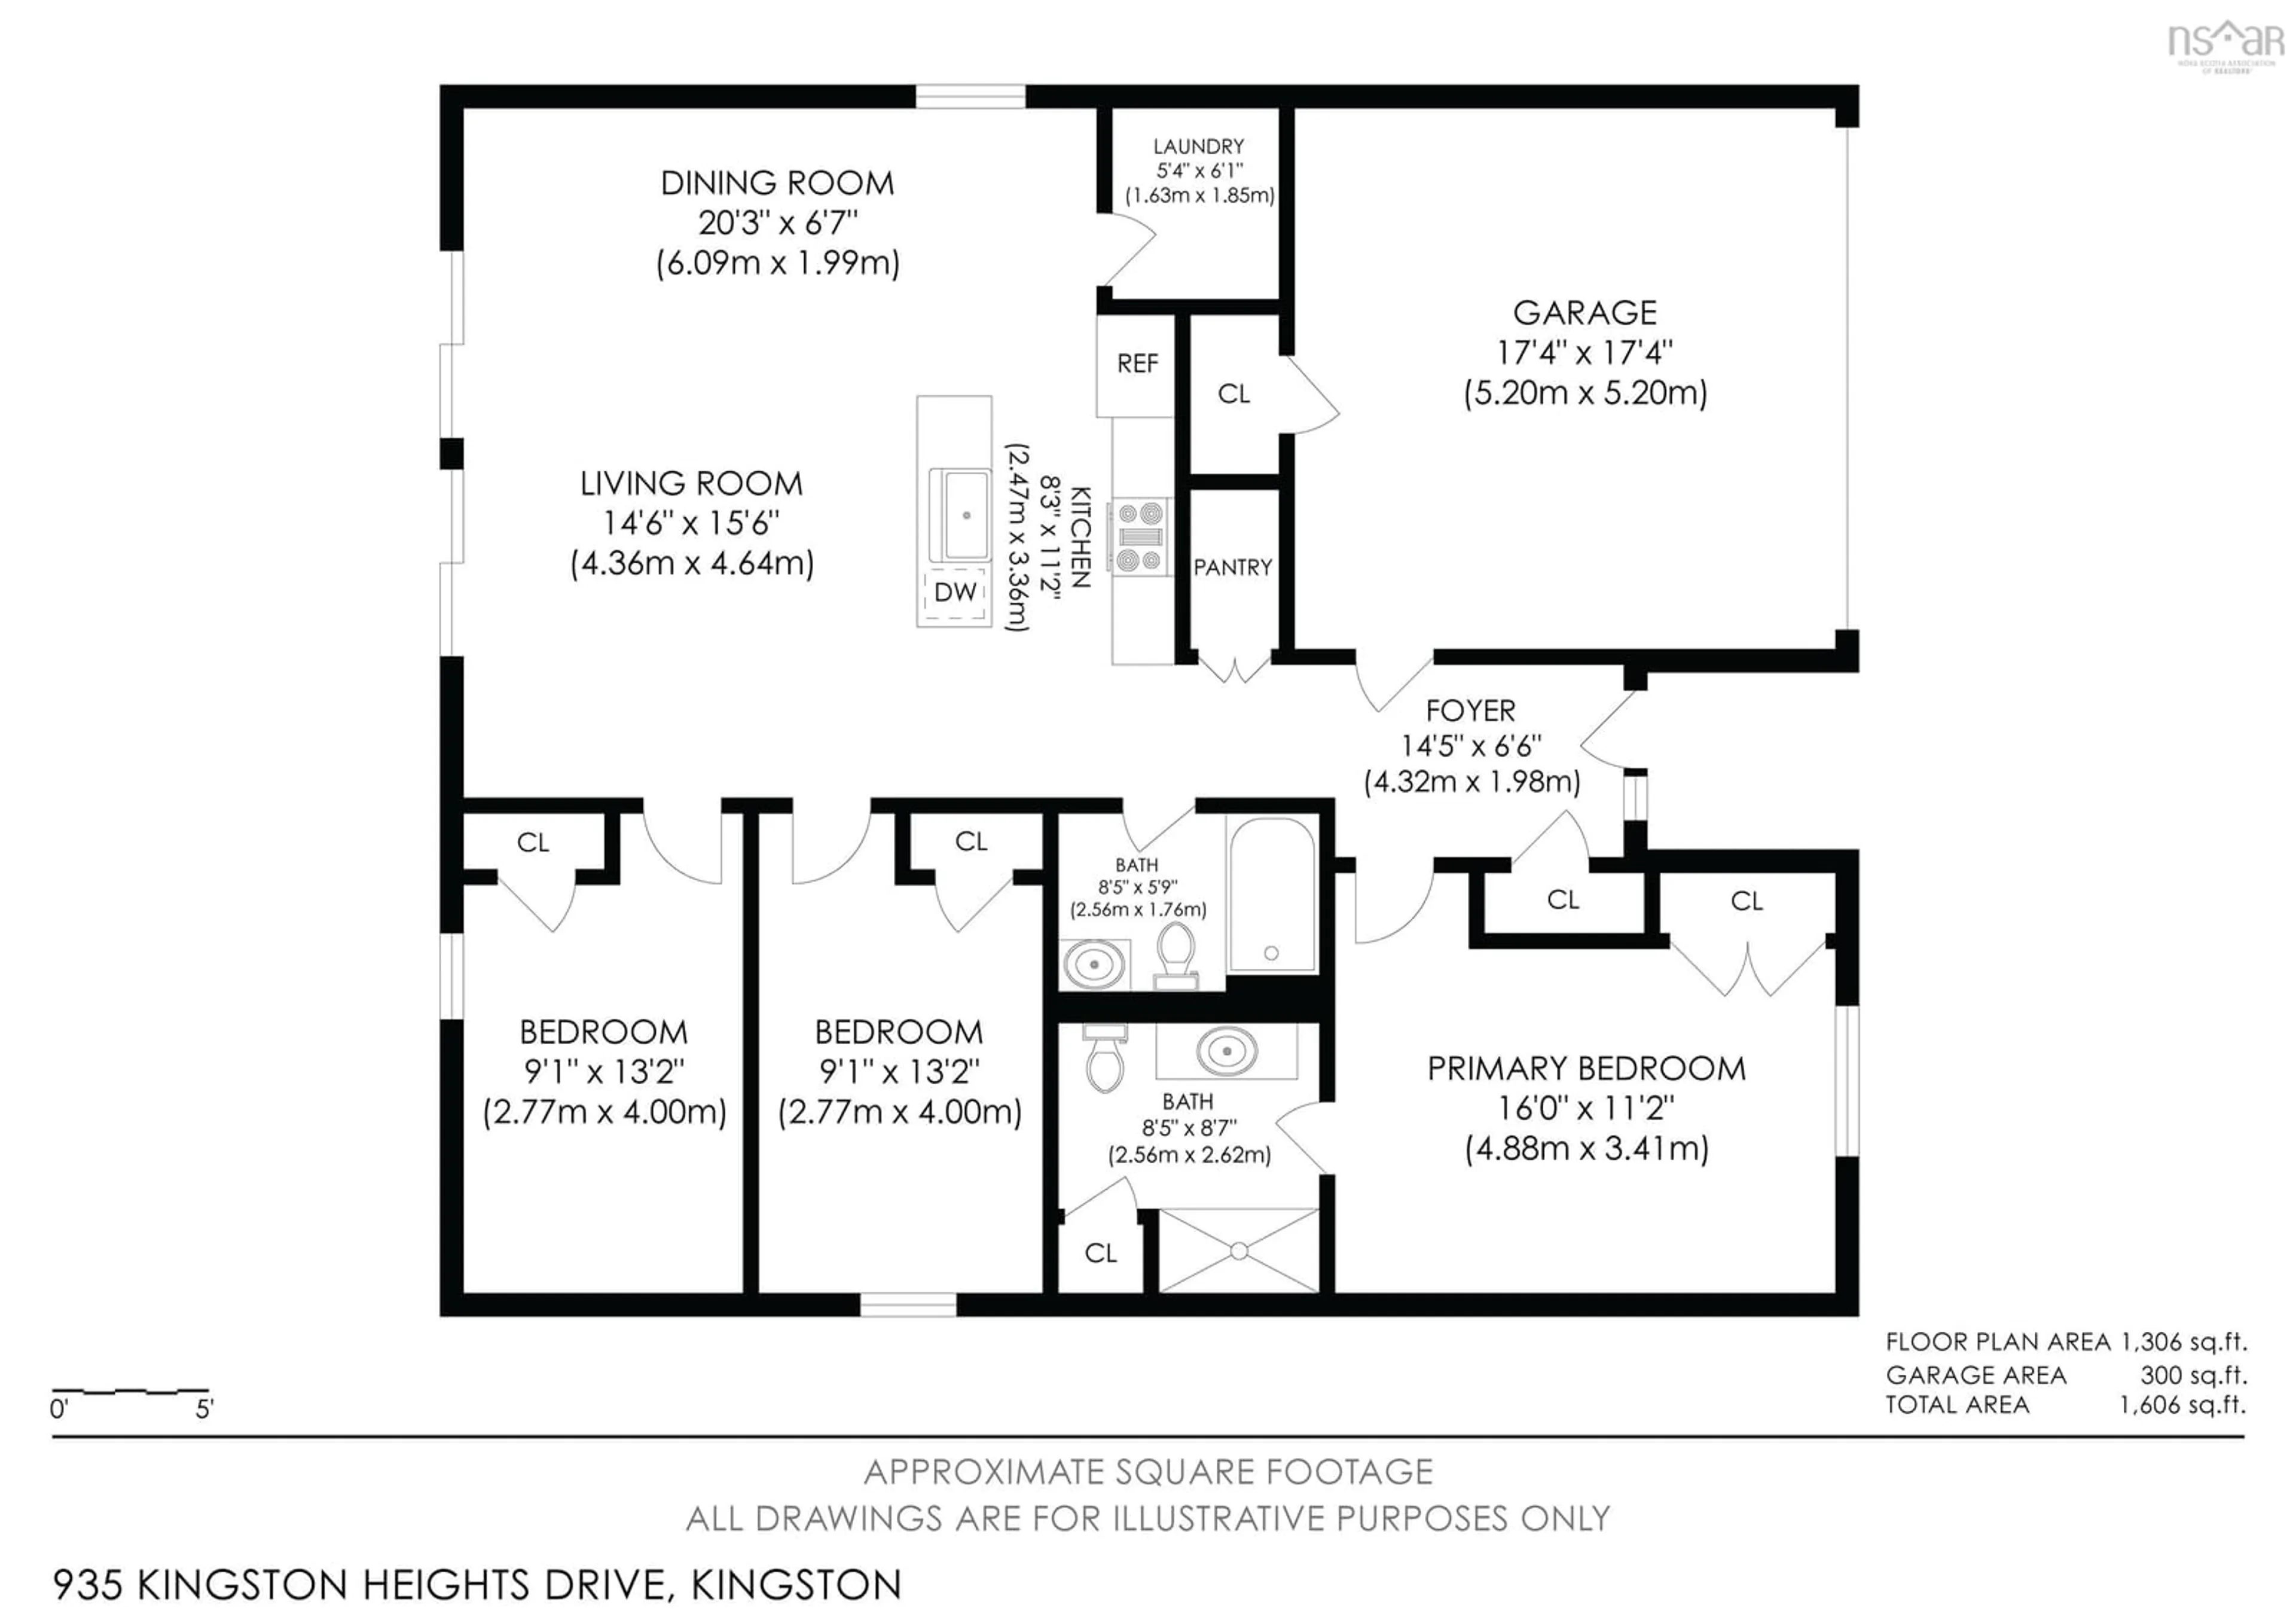 Floor plan for 935 Kingston Heights Dr, Kingston Nova Scotia B0P 1R0